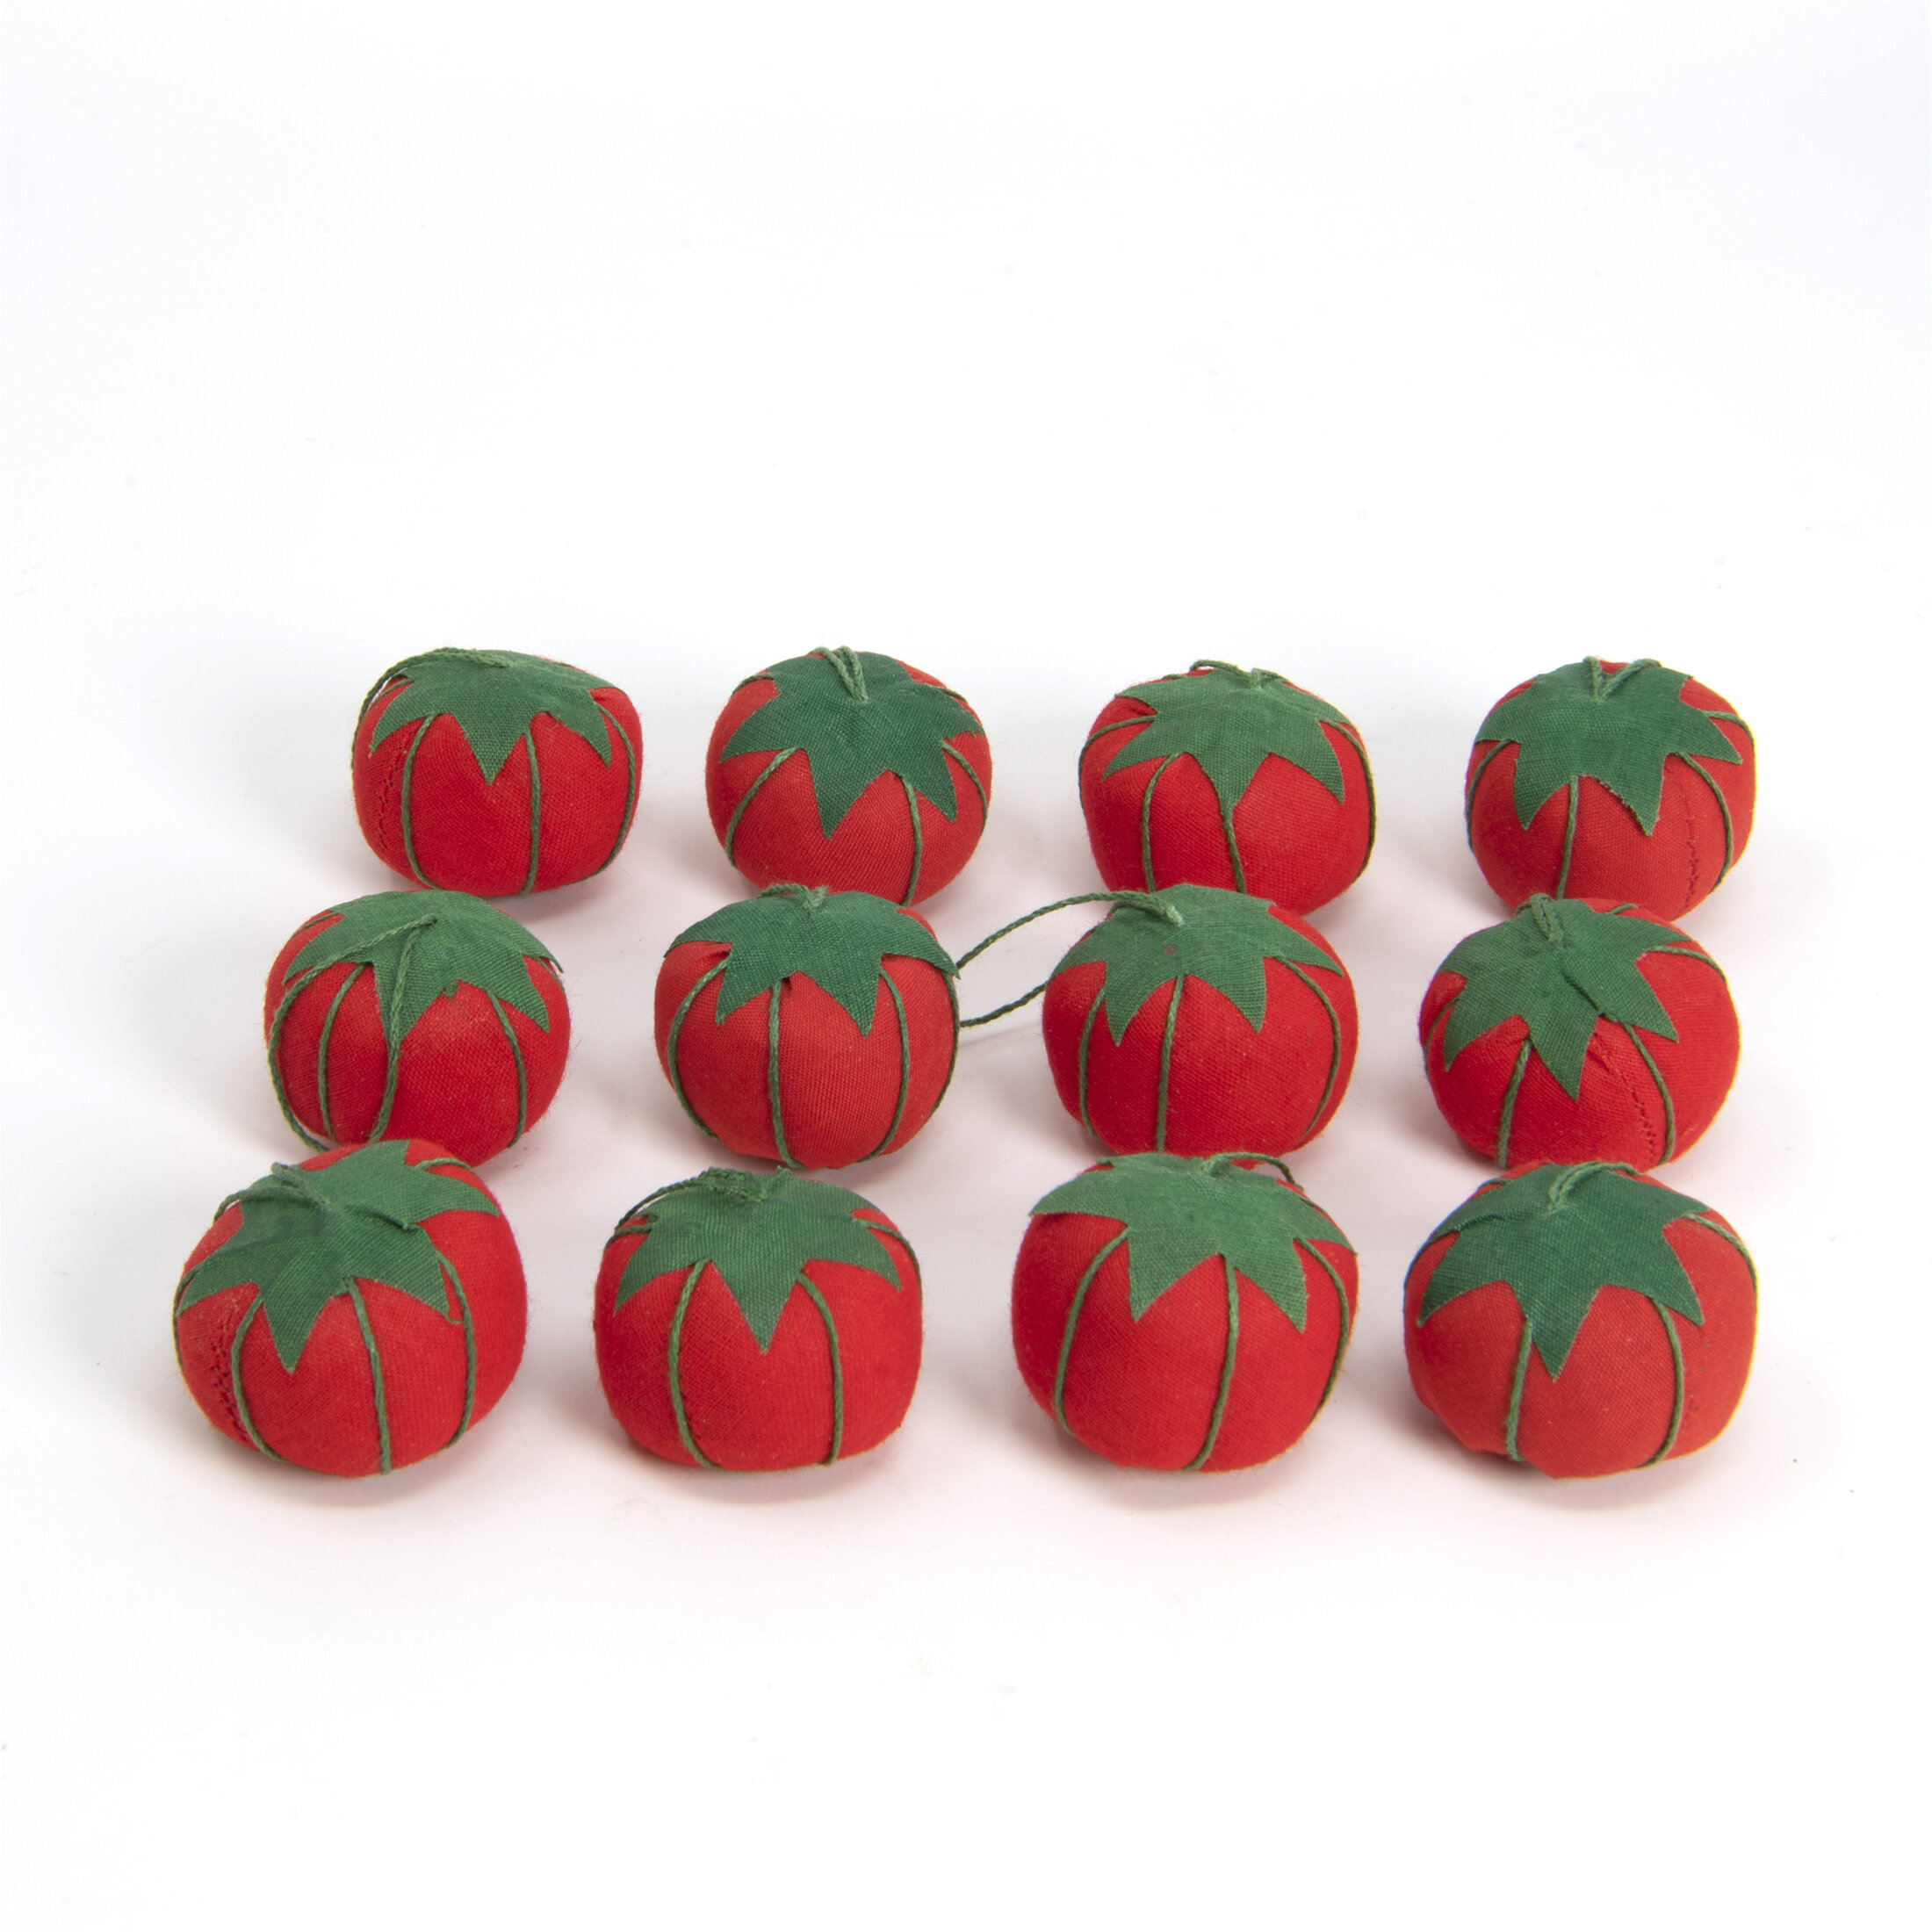 Dritz Tomato Pin Cushions, 1, Red, 12 pc